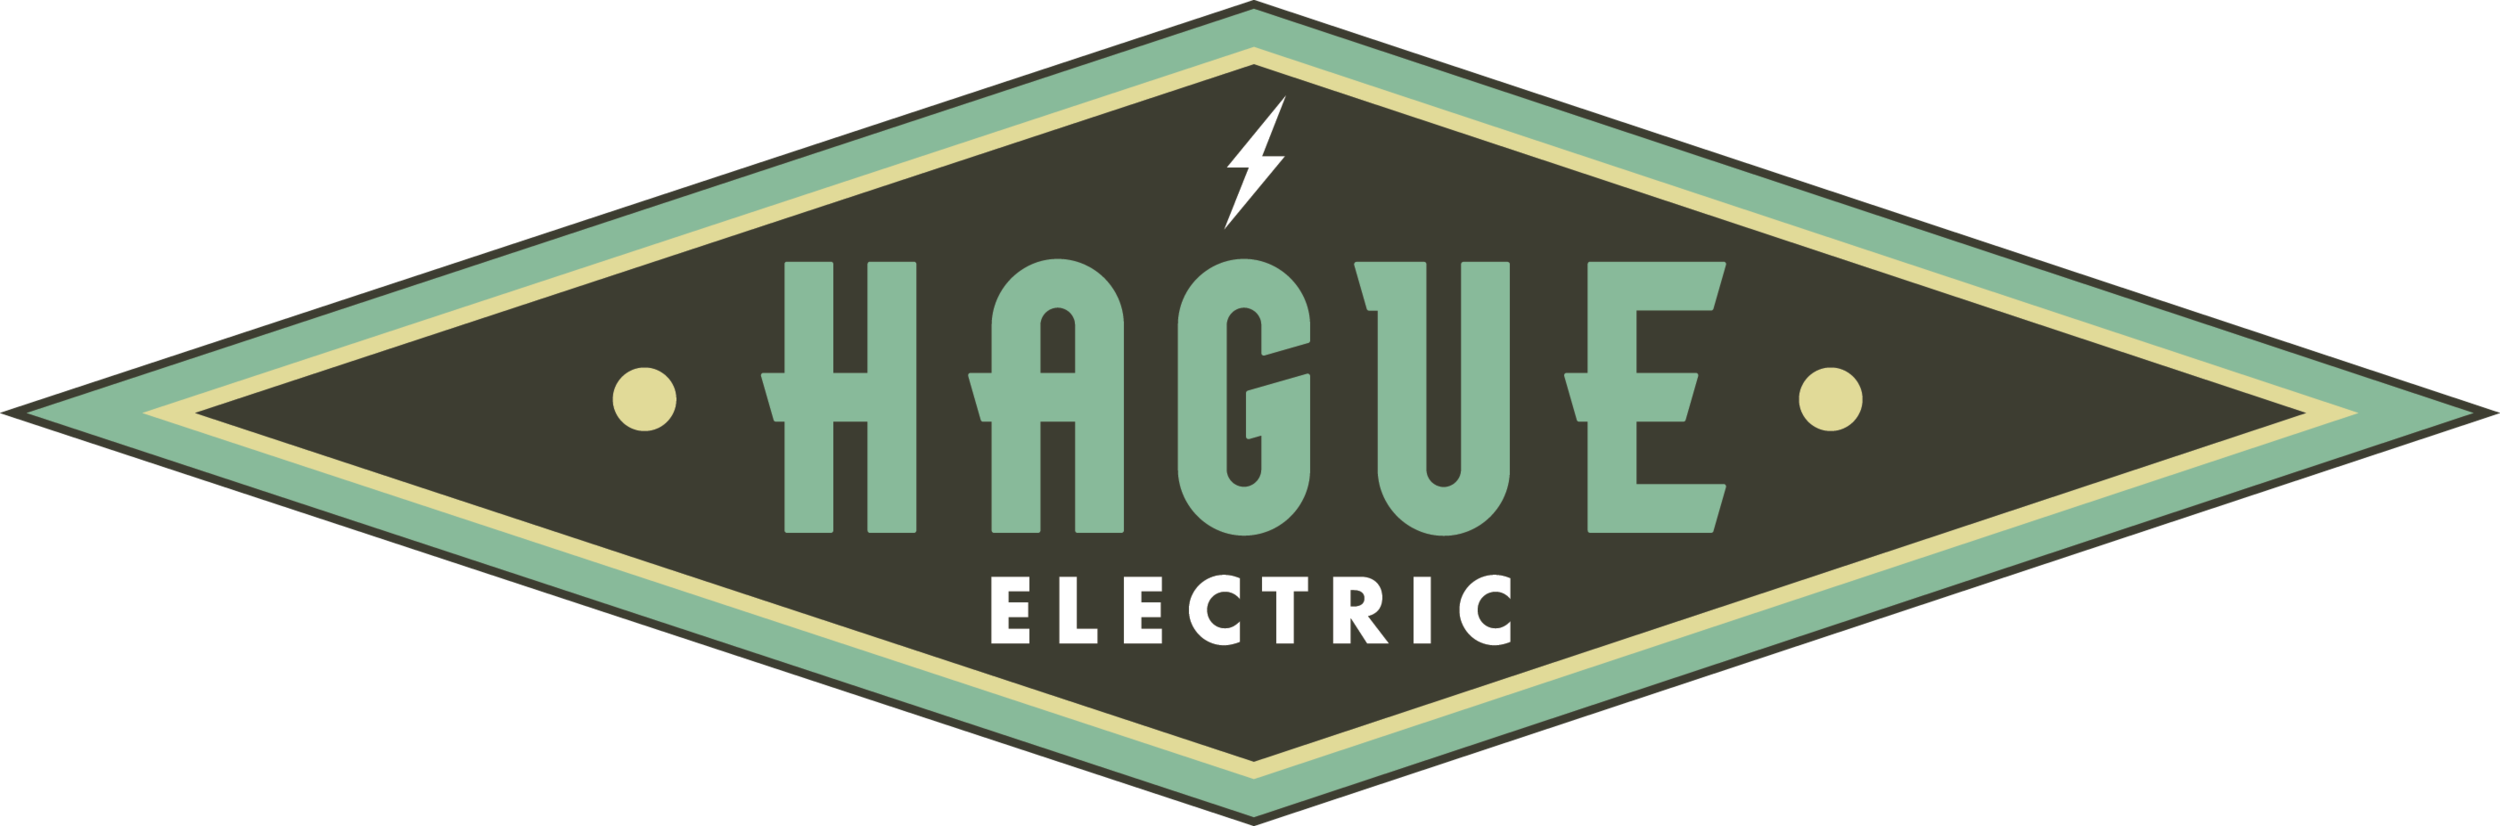 Hague Electric